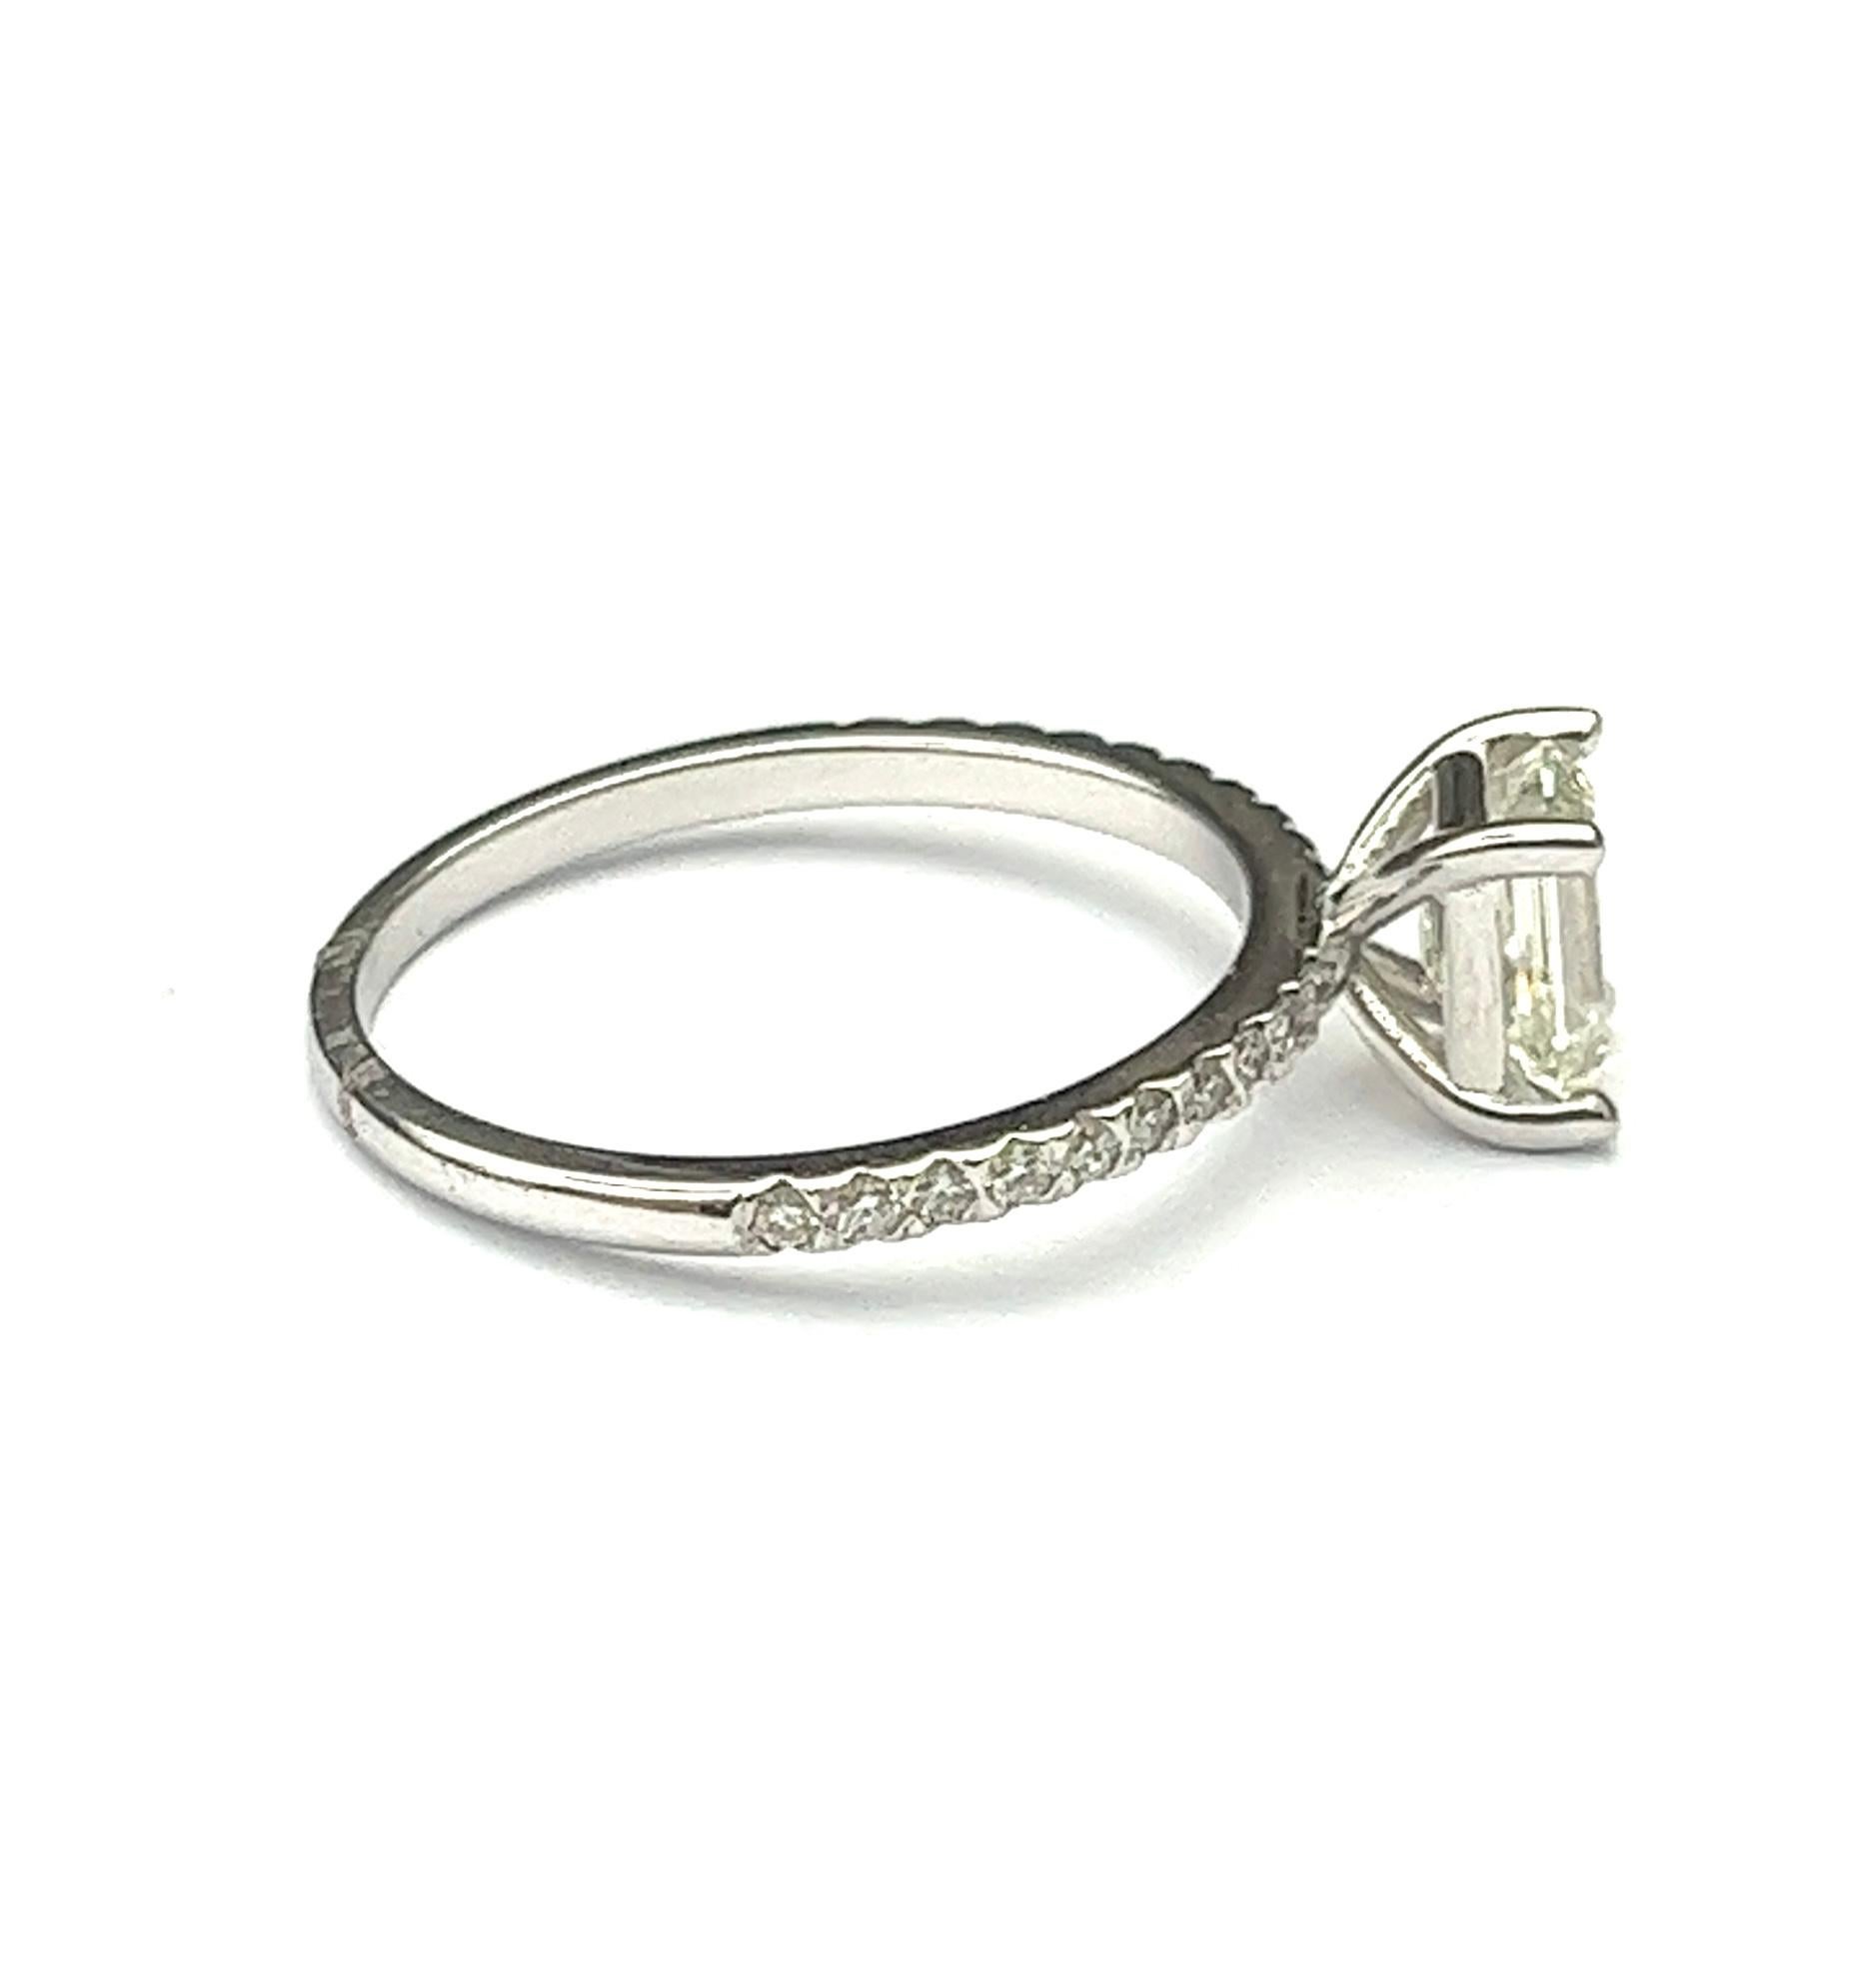 1.3 carat emerald cut diamond ring